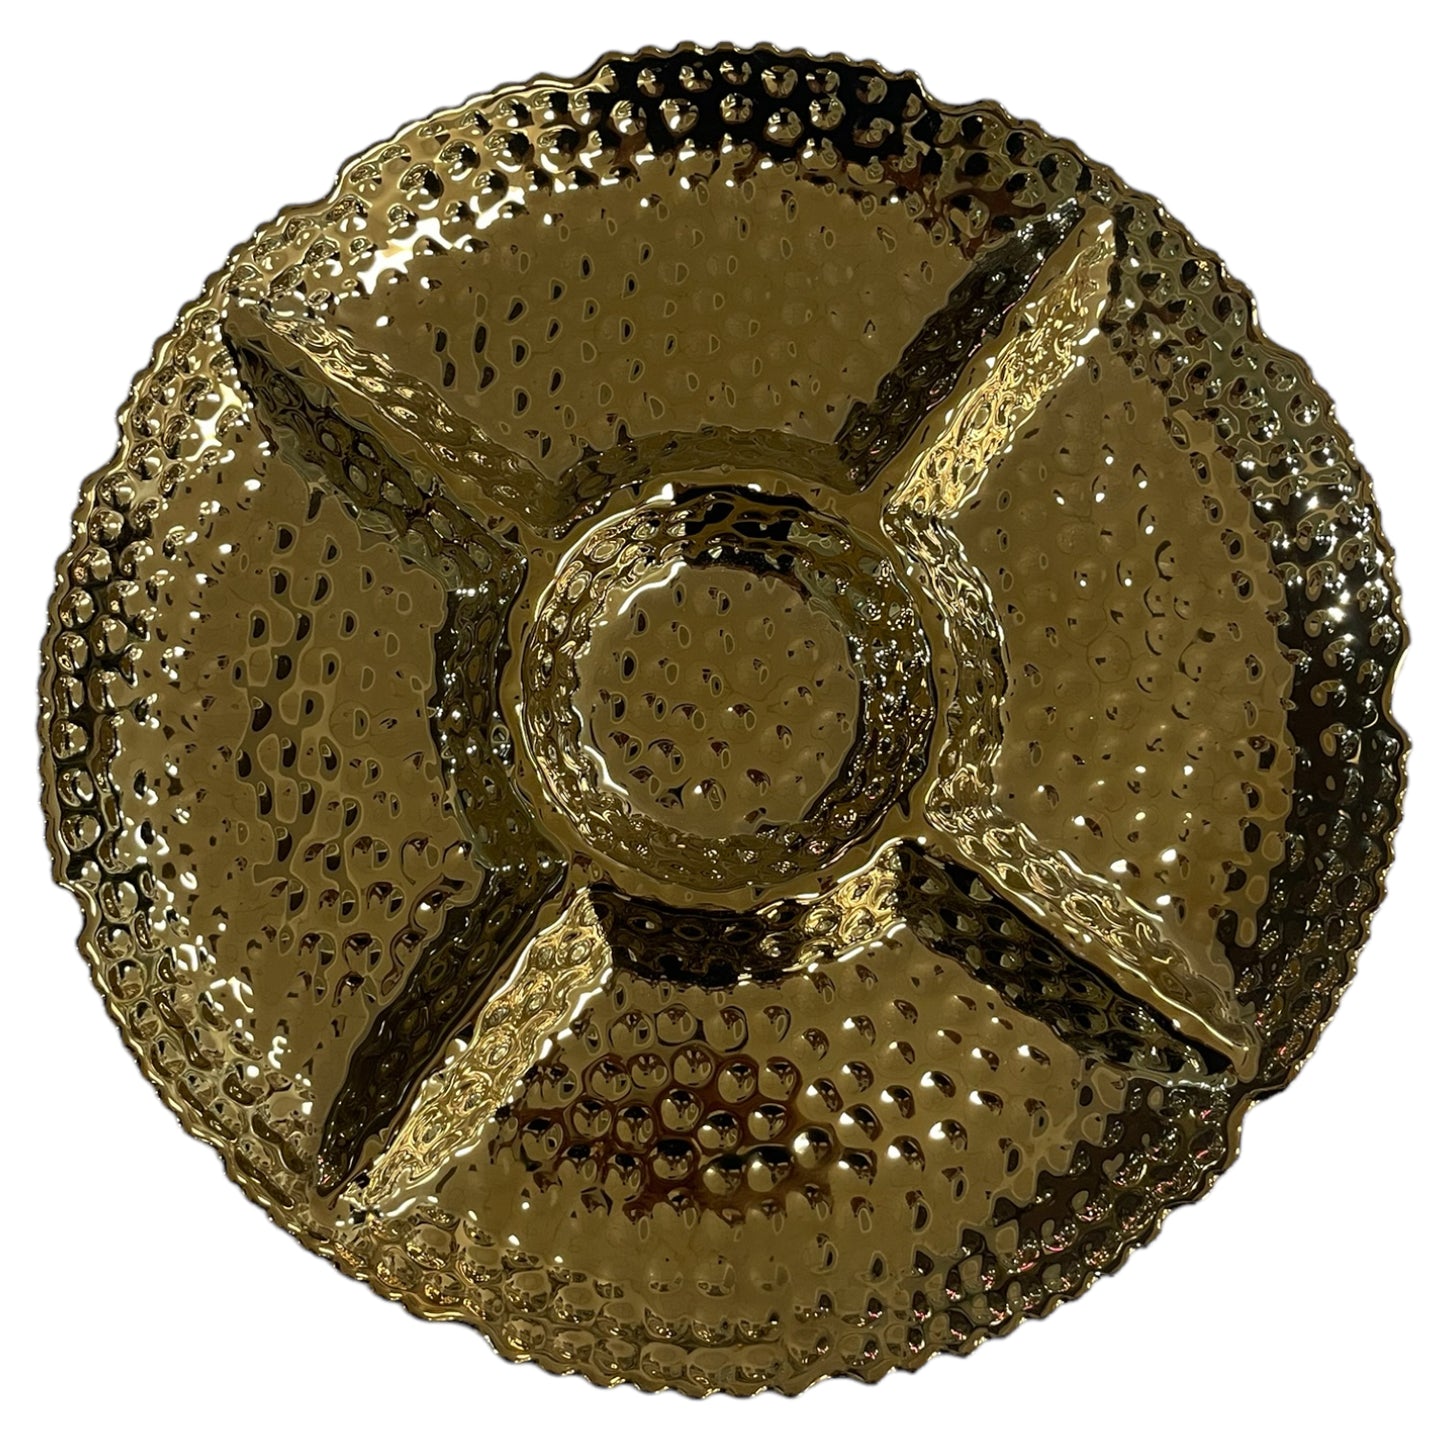 Round serving gold porcelain plate